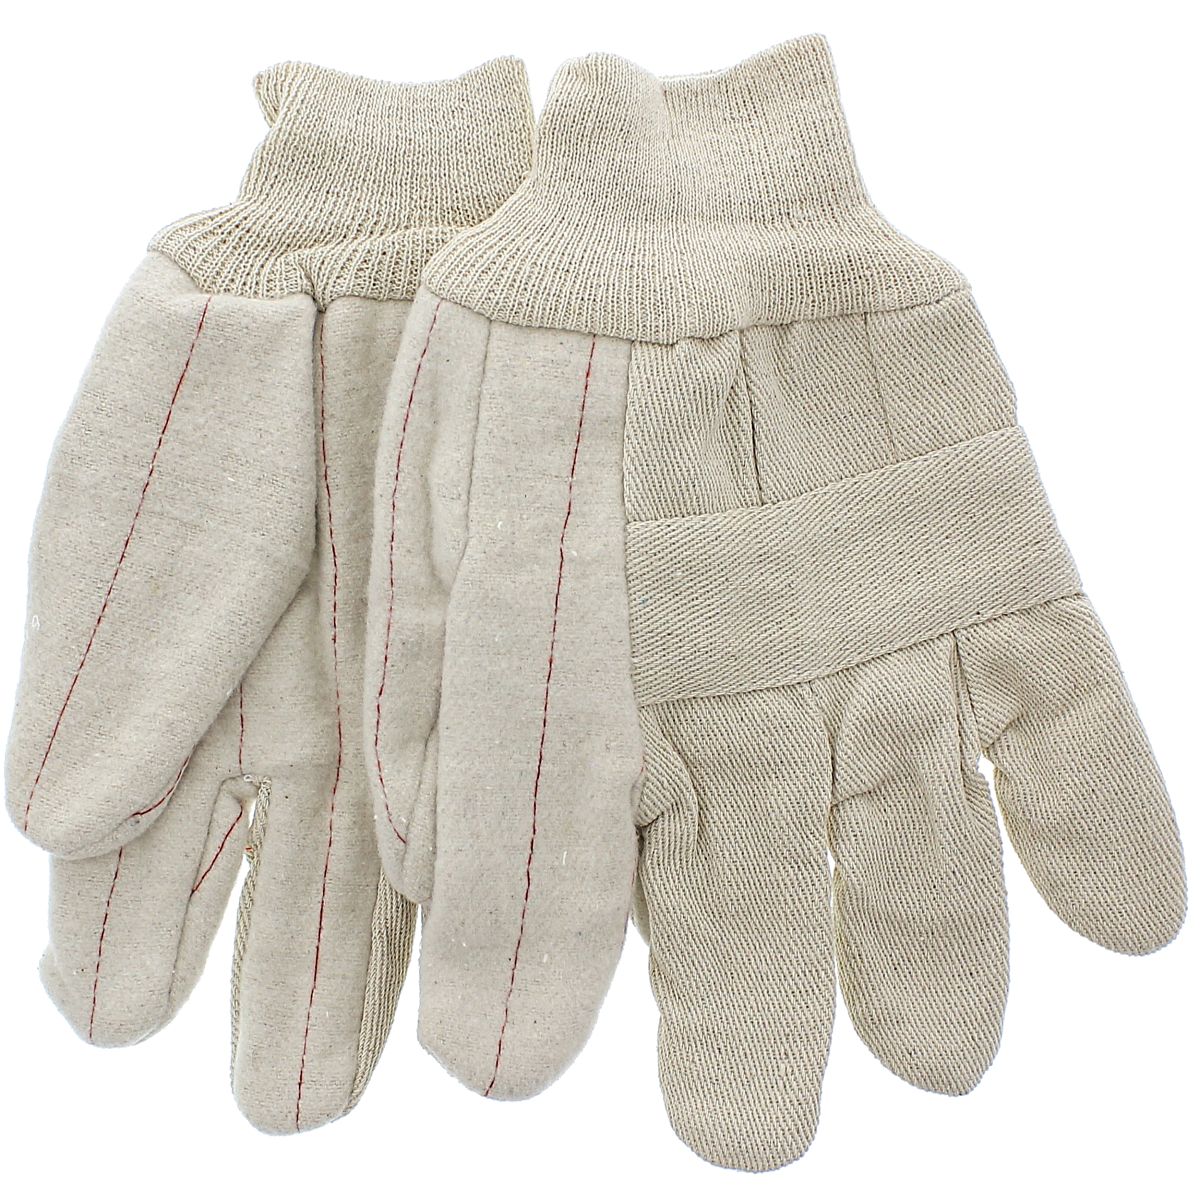 Cotton Work Gloves, Large — 24 oz.